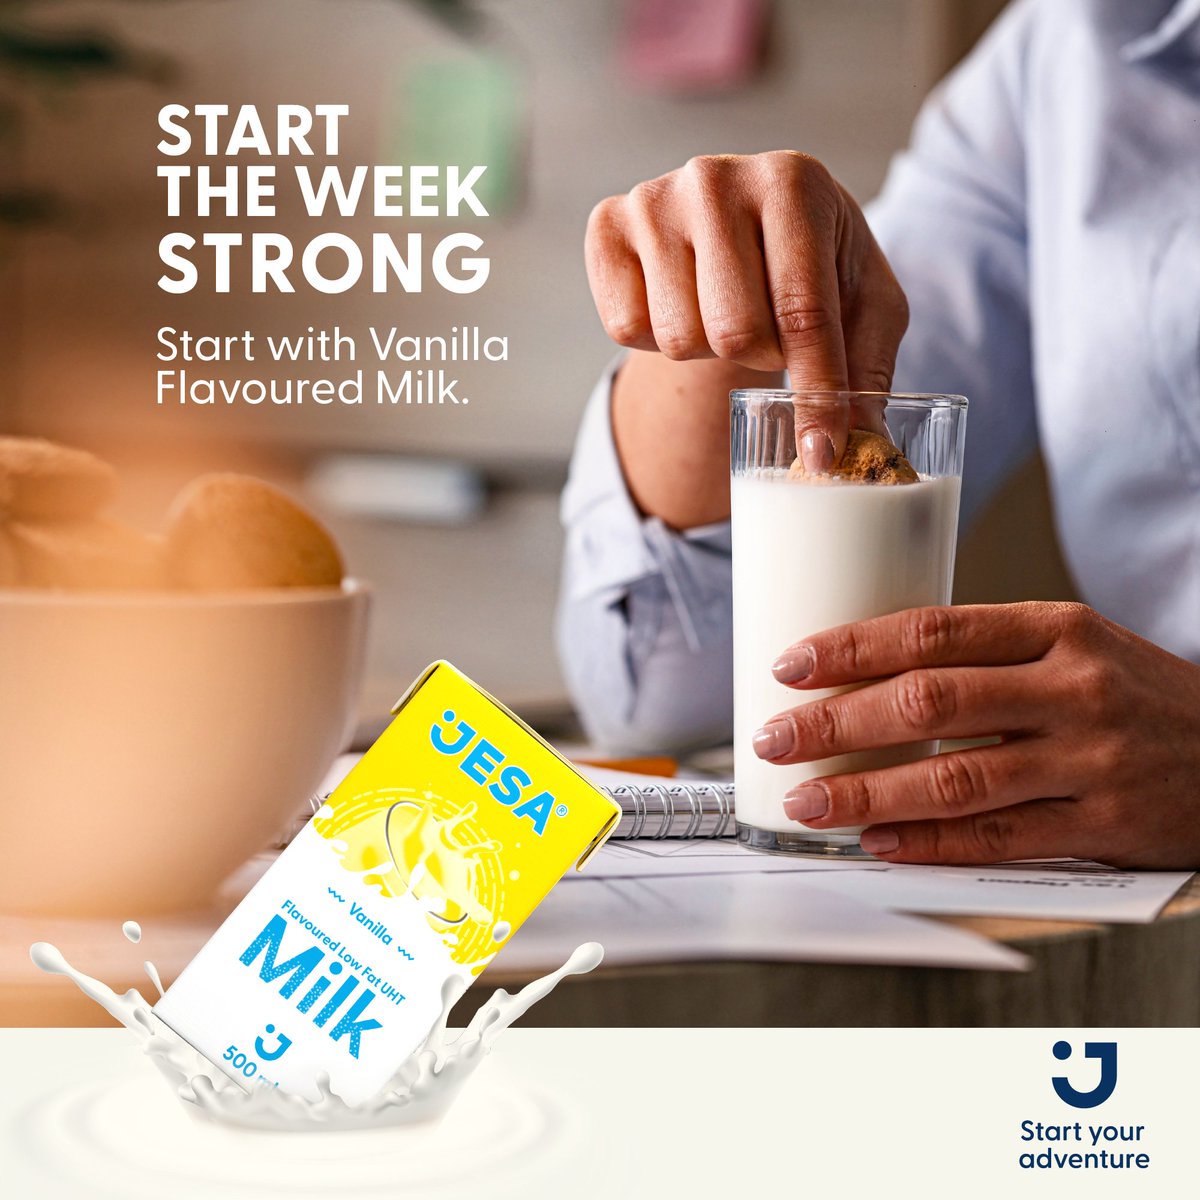 Begin your week with JESA Vanilla Flavoured Milk and feel that unique rush of energy. #StartYourAdventure.